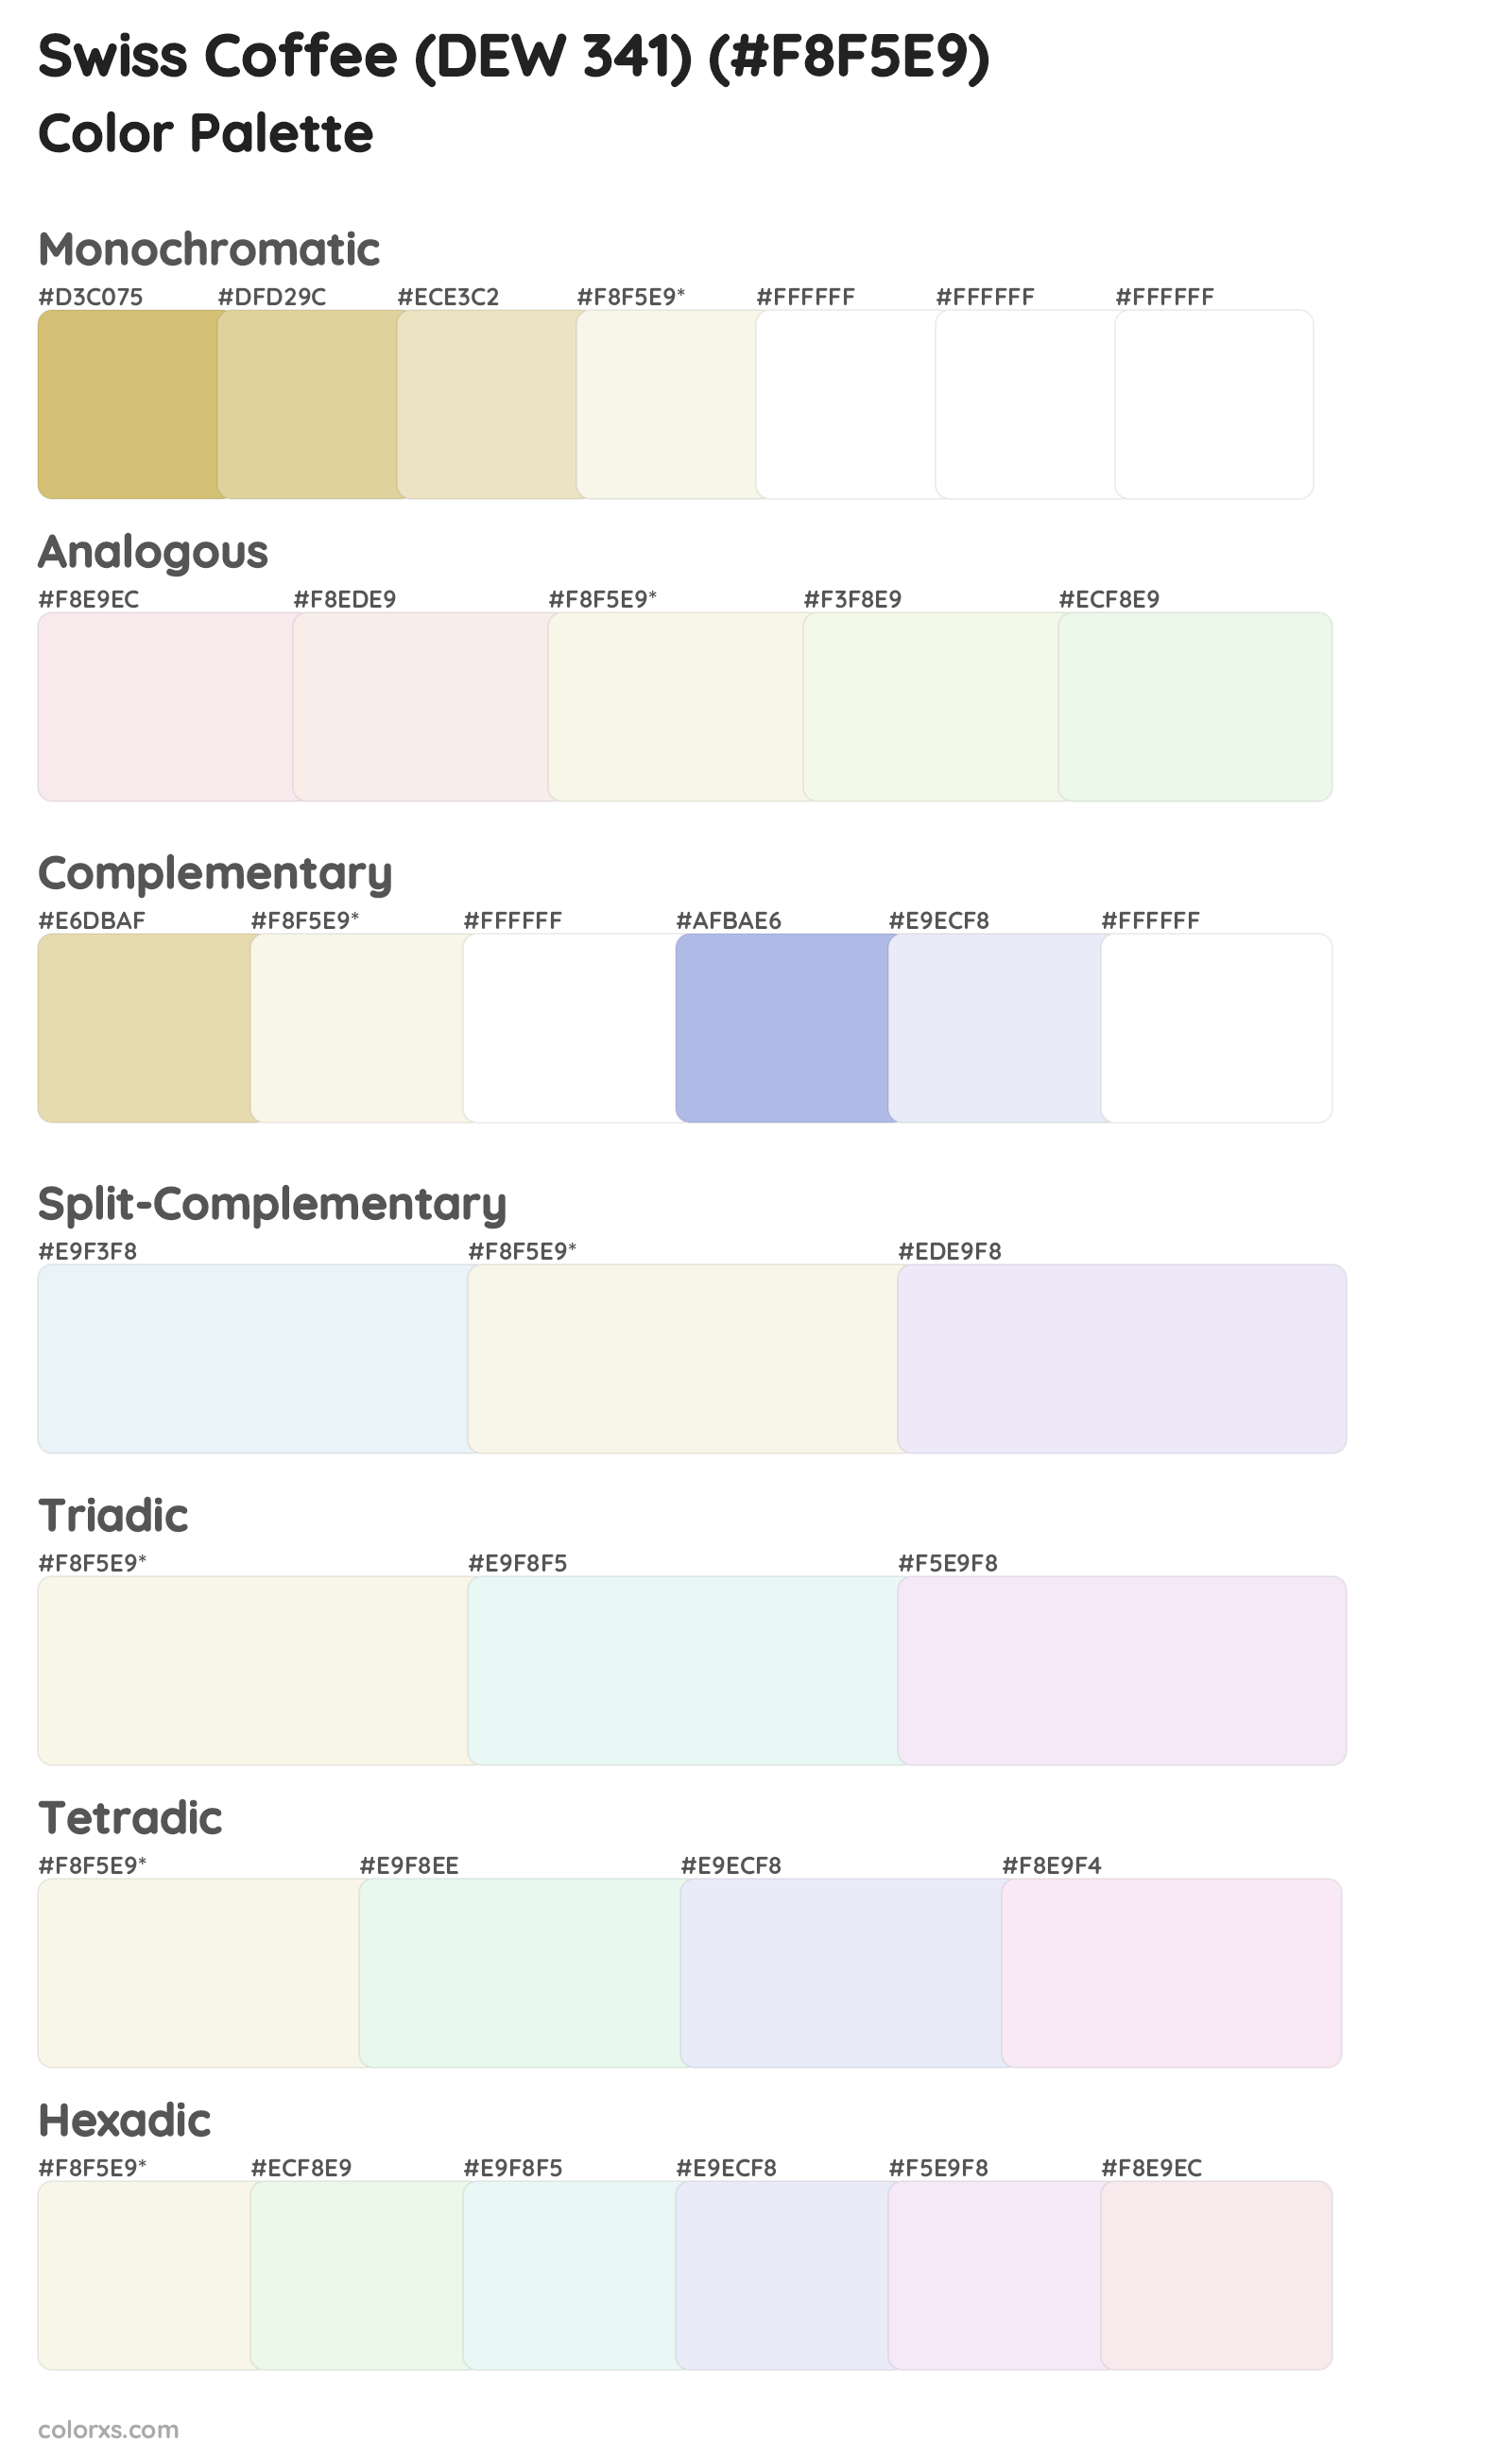 Swiss Coffee (DEW 341) Color Scheme Palettes